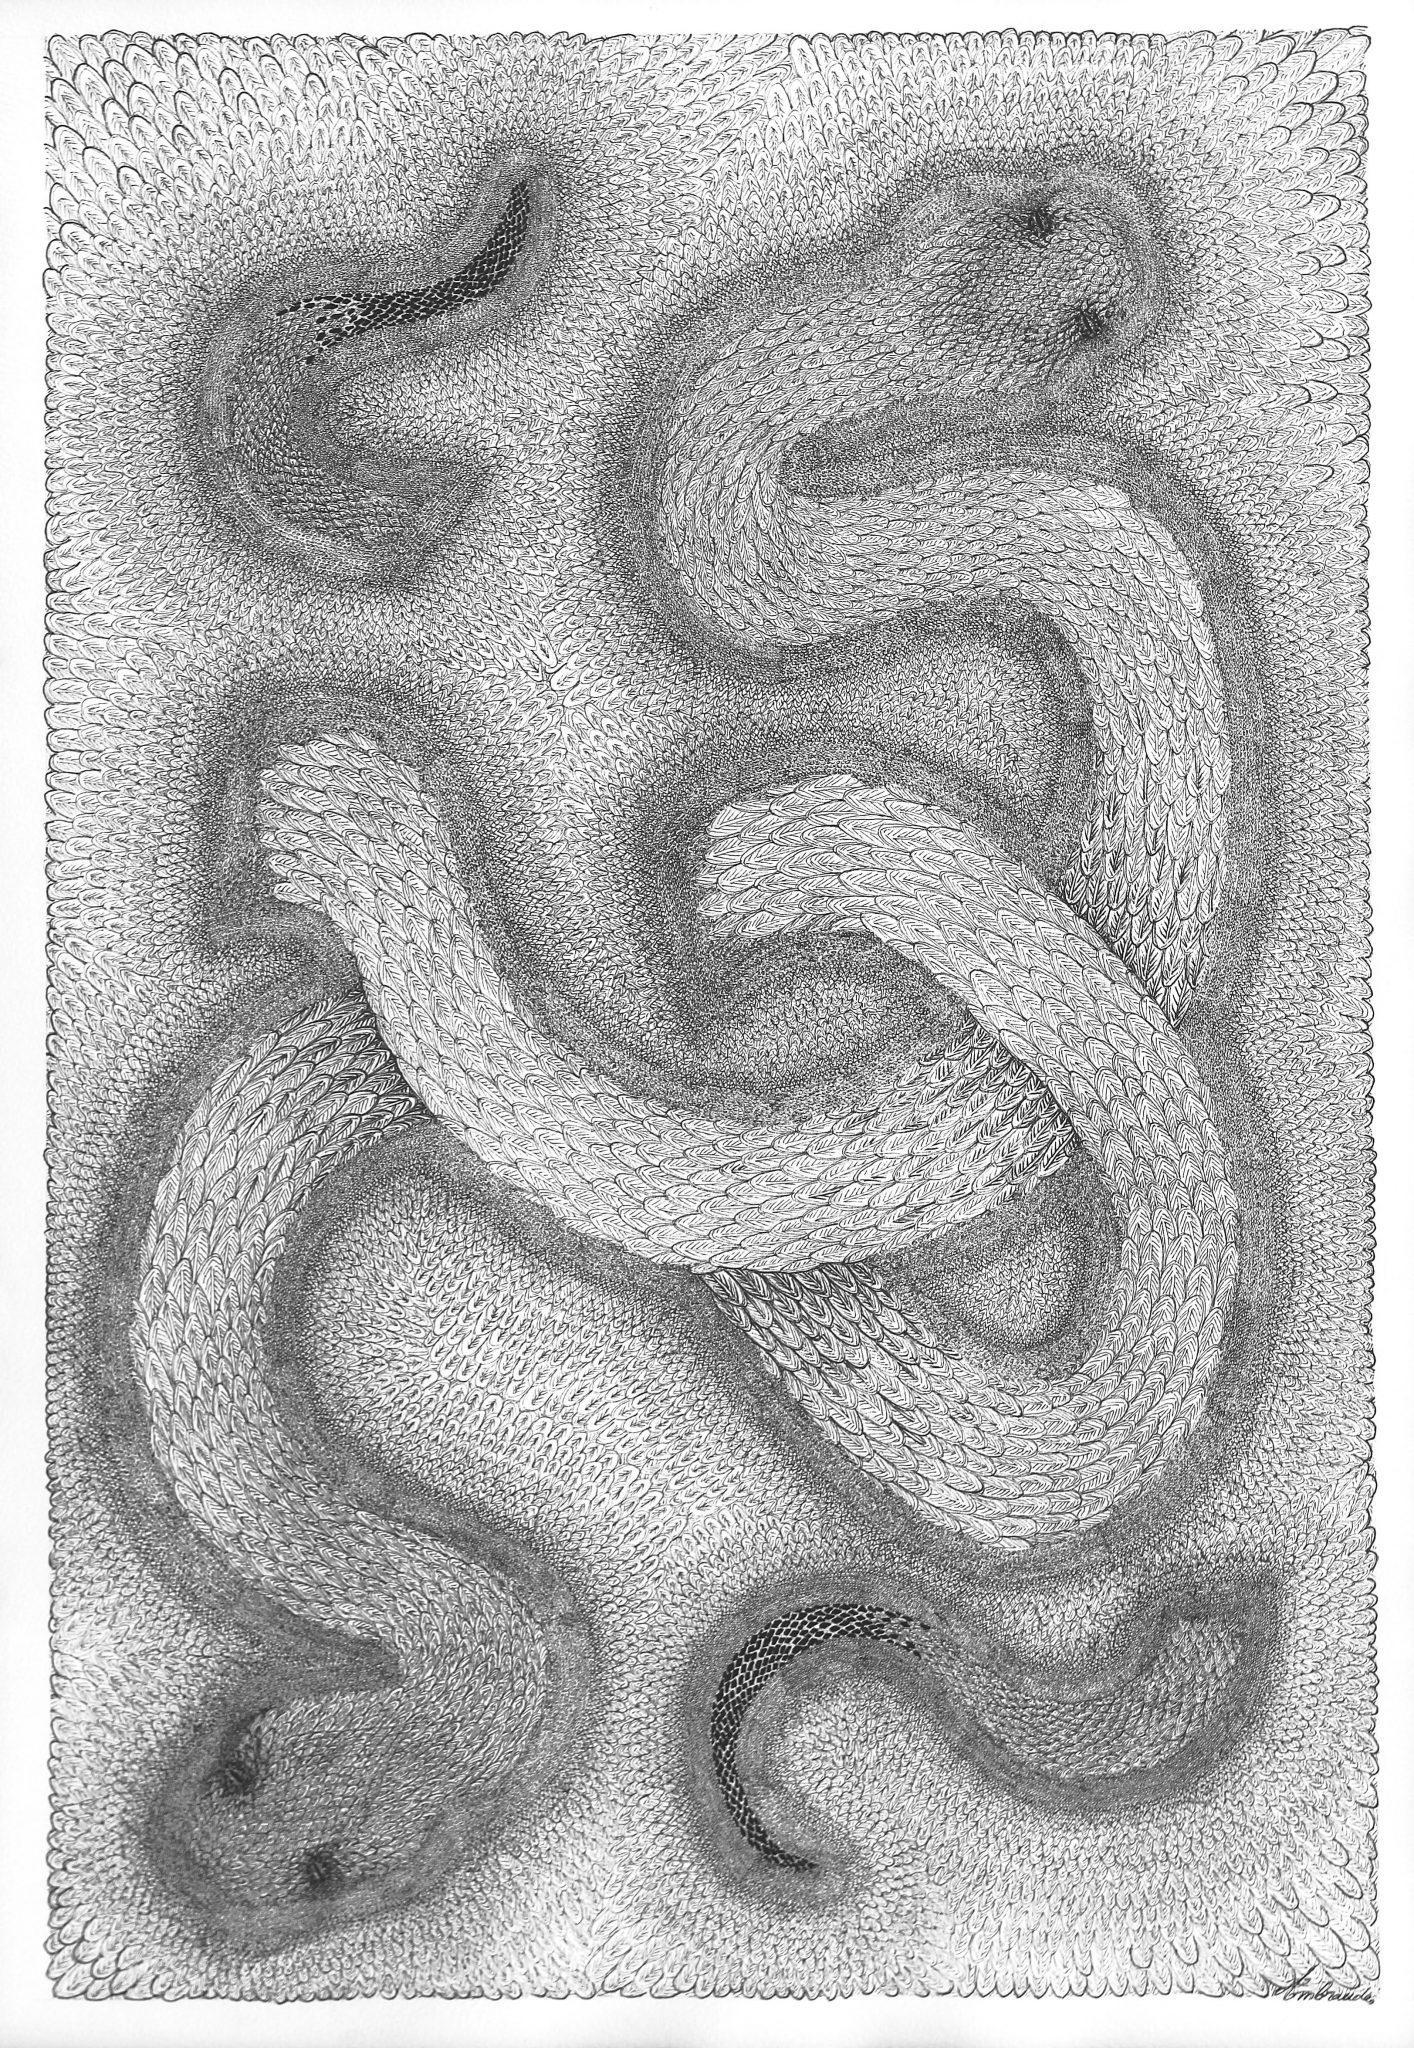 serpents